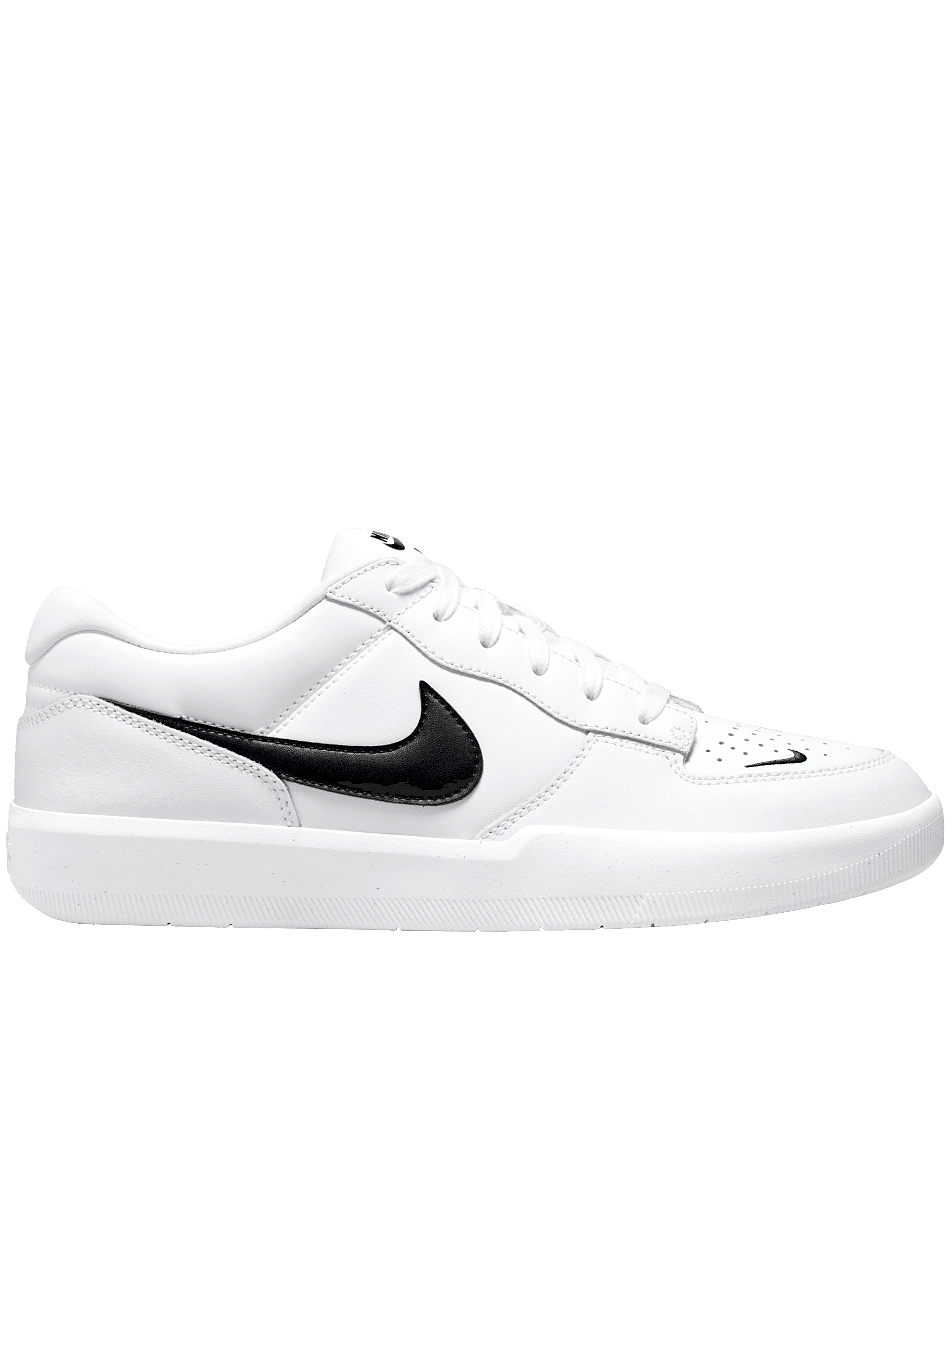 Nike SB Force 58 Premium Shoe White Black ONLINE ONLY